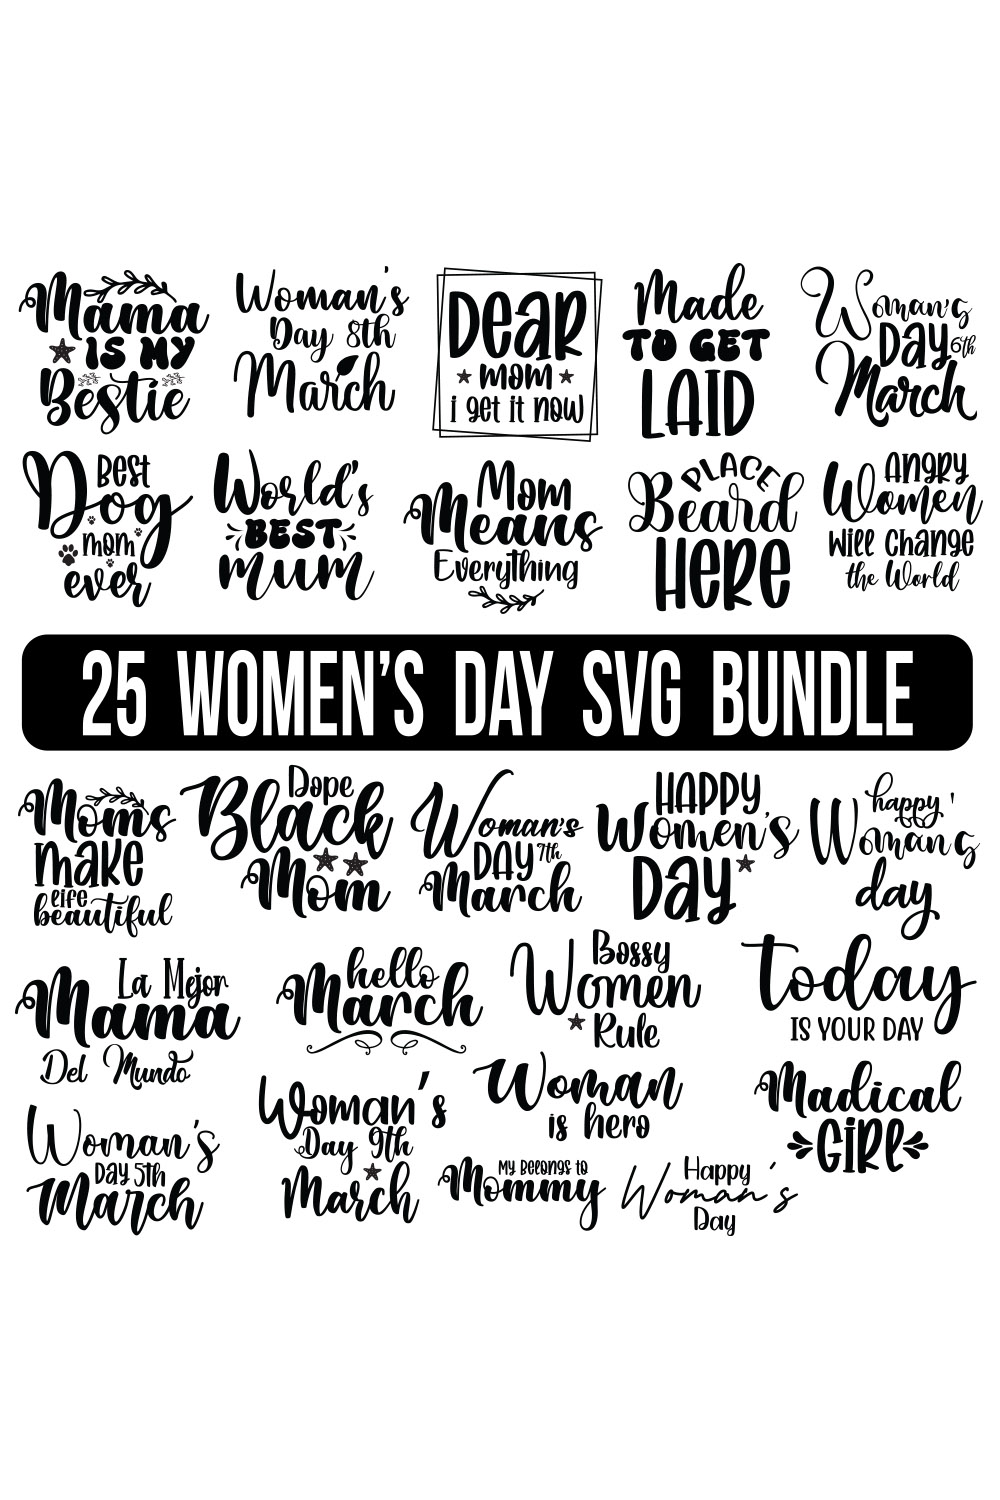 Women's Day SVG Bundle, Women's Day SVG designs, Girl power designs, SVG files, Digital downloads, pinterest preview image.